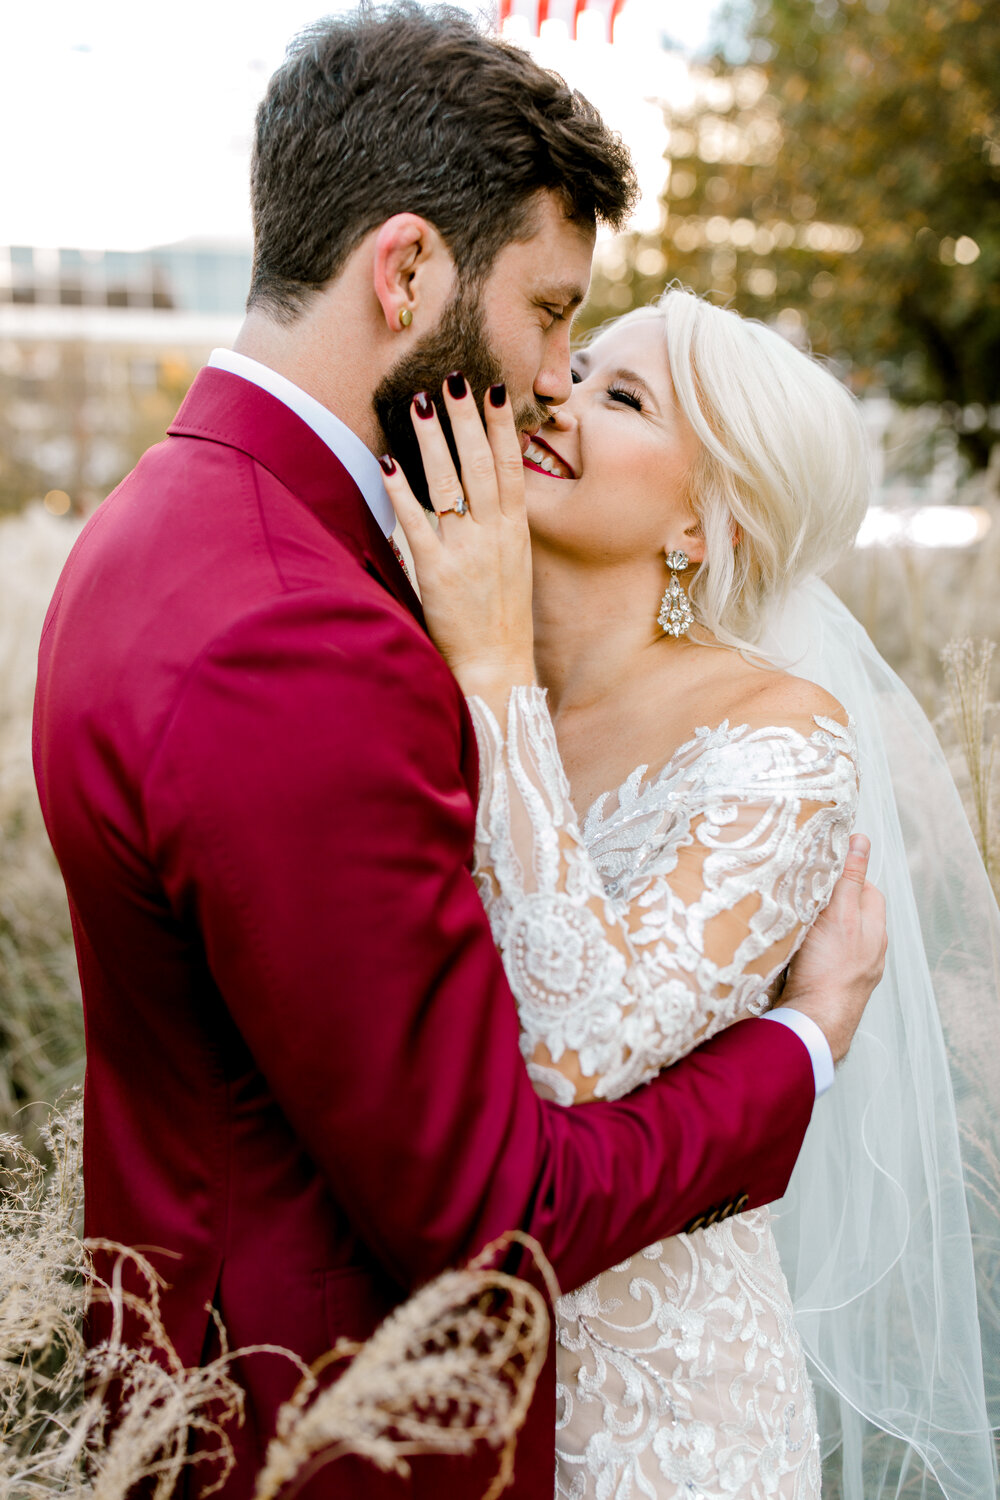 Texas Wedding Photographer - We the Romantics - bridget+Zac-7.jpg